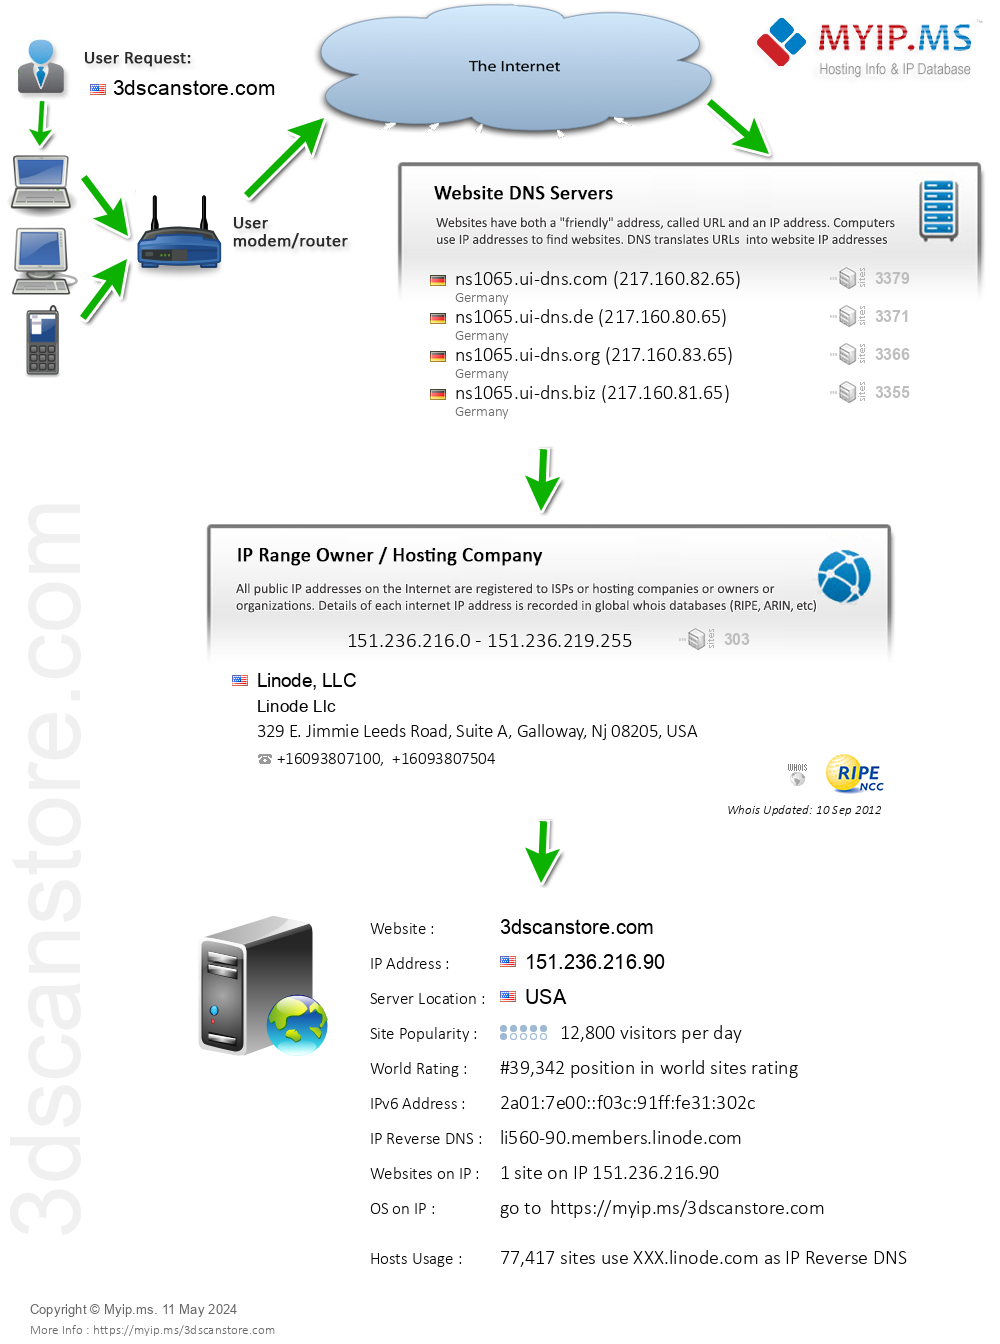 3dscanstore.com - Website Hosting Visual IP Diagram